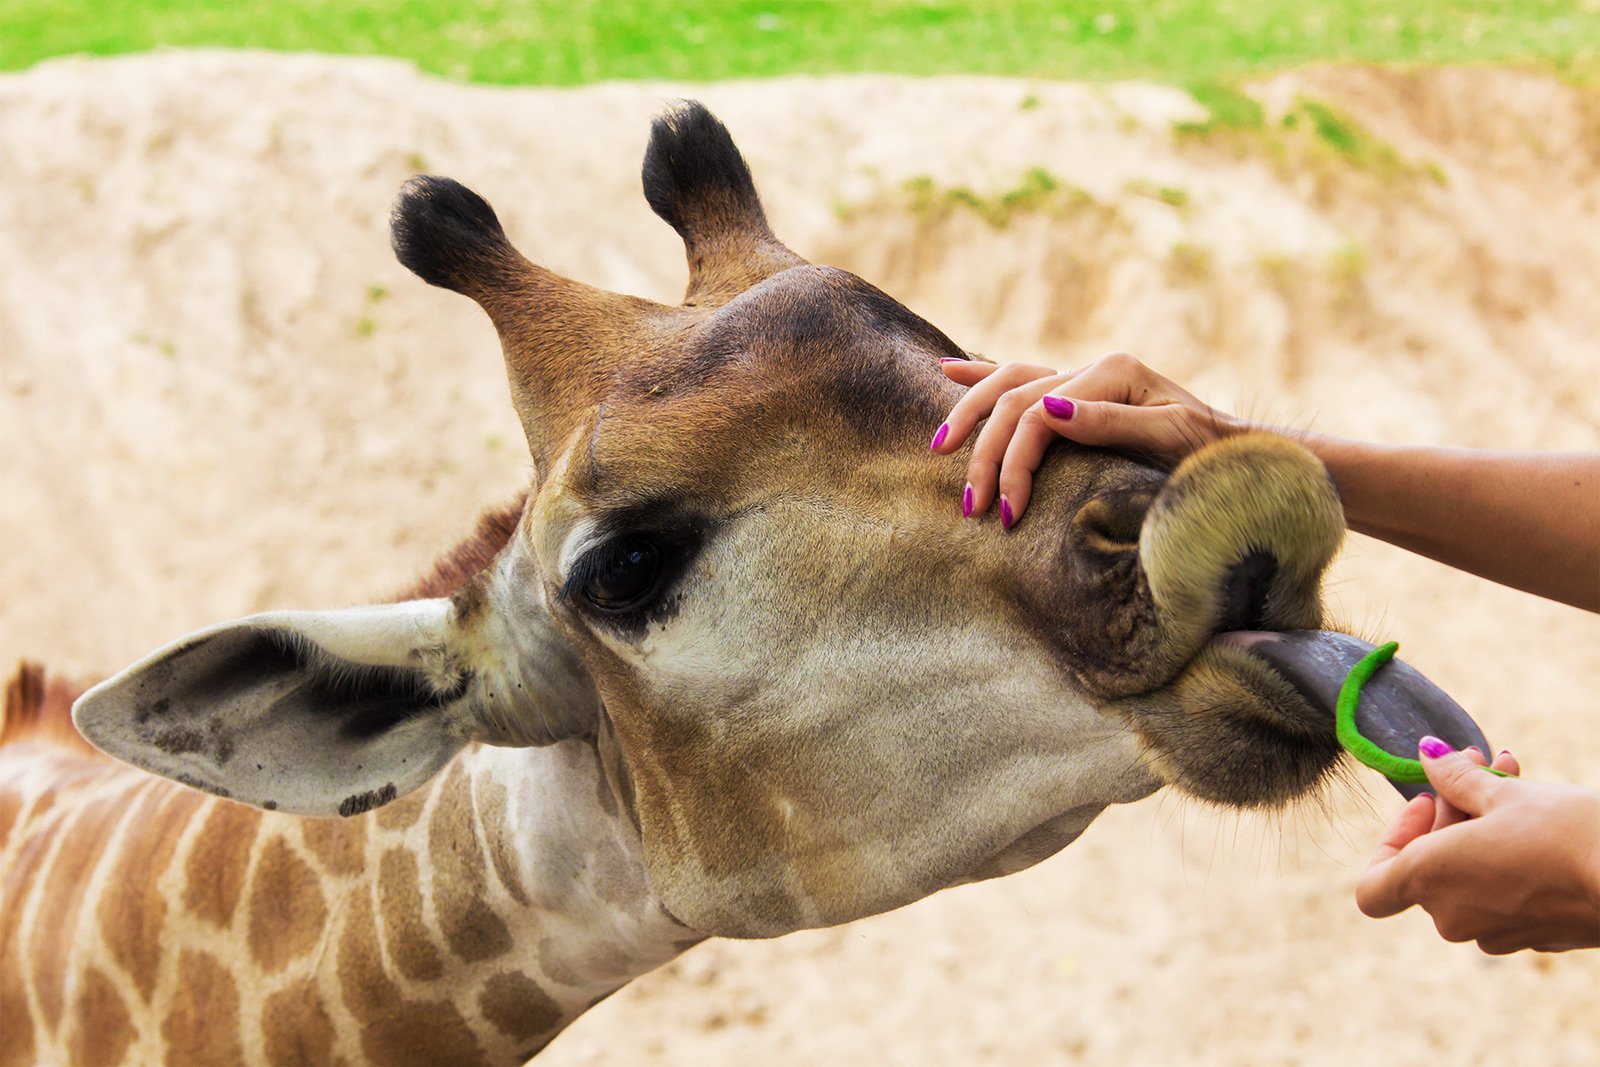 How to feed giraffes in Al Ain